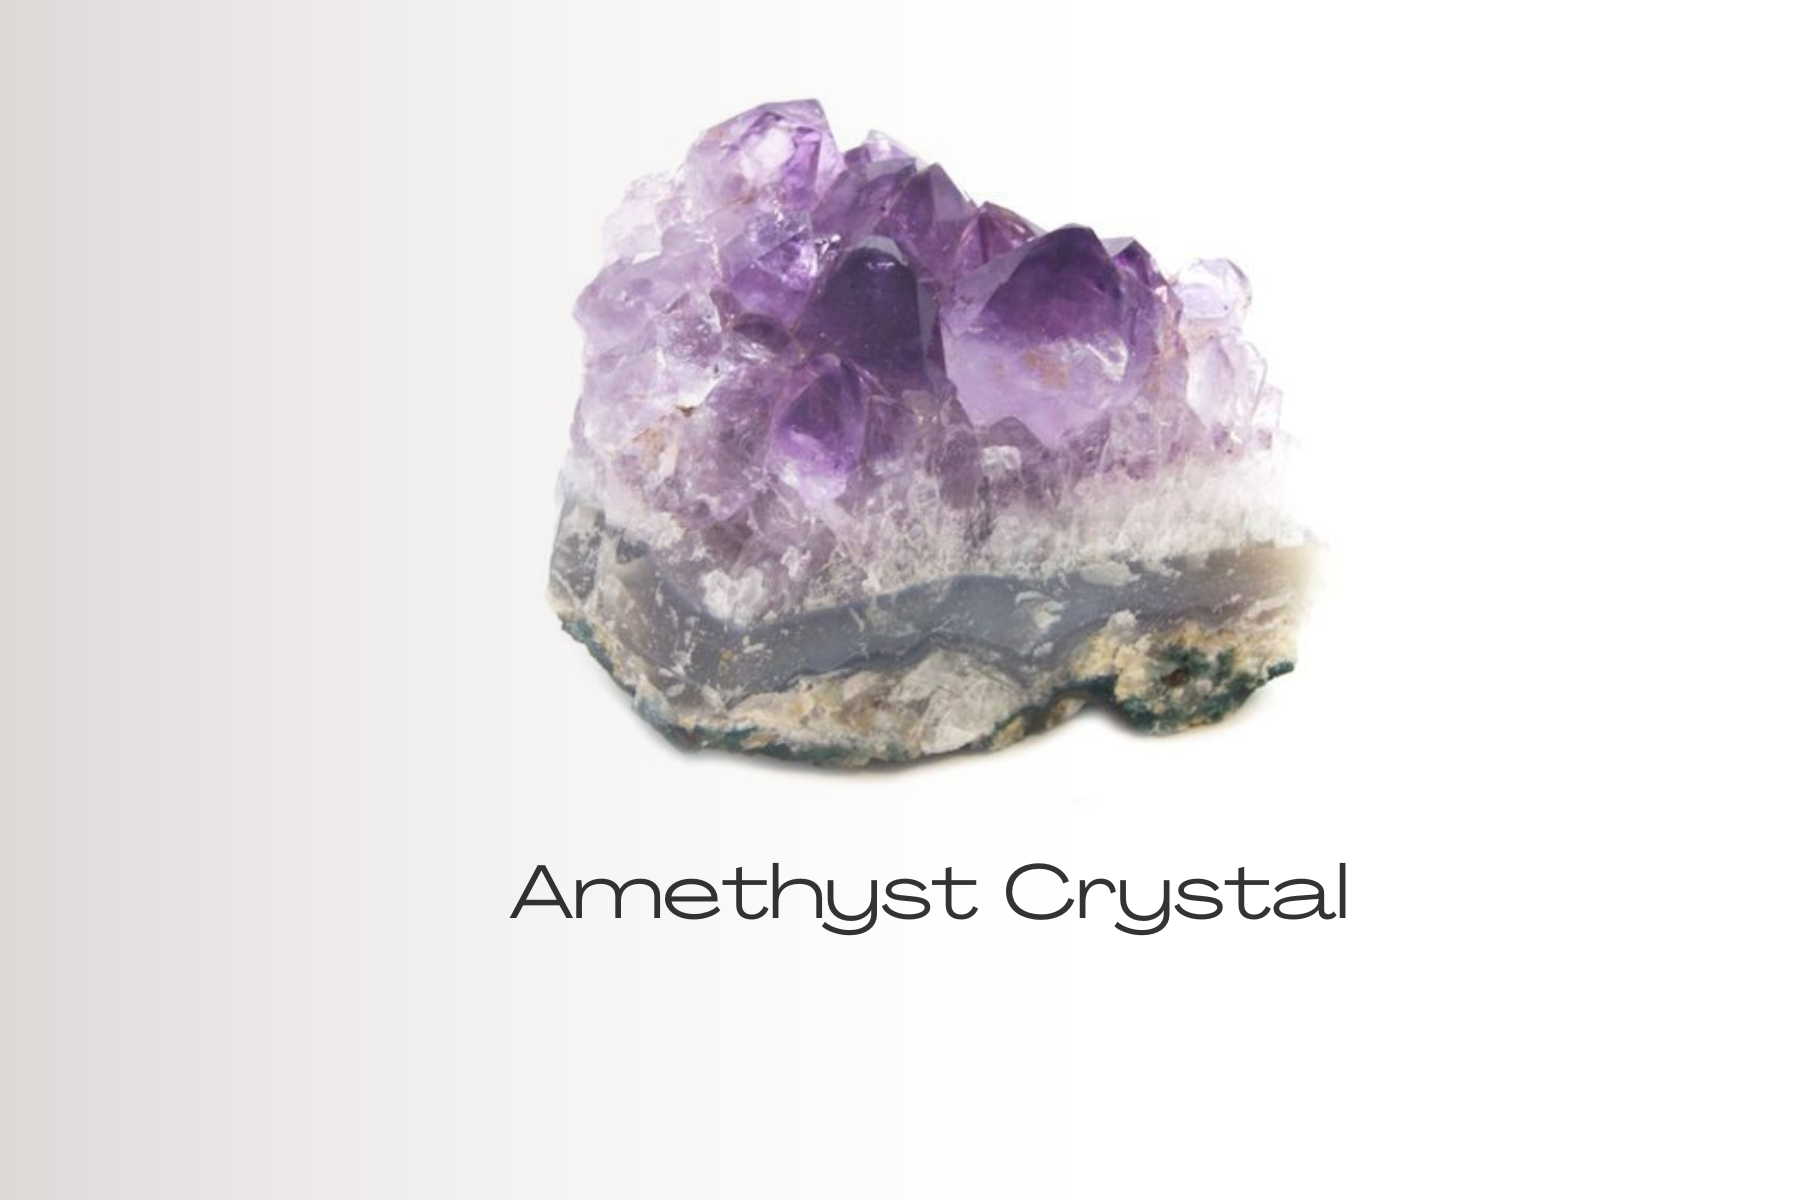 Rock-formed amethyst stone